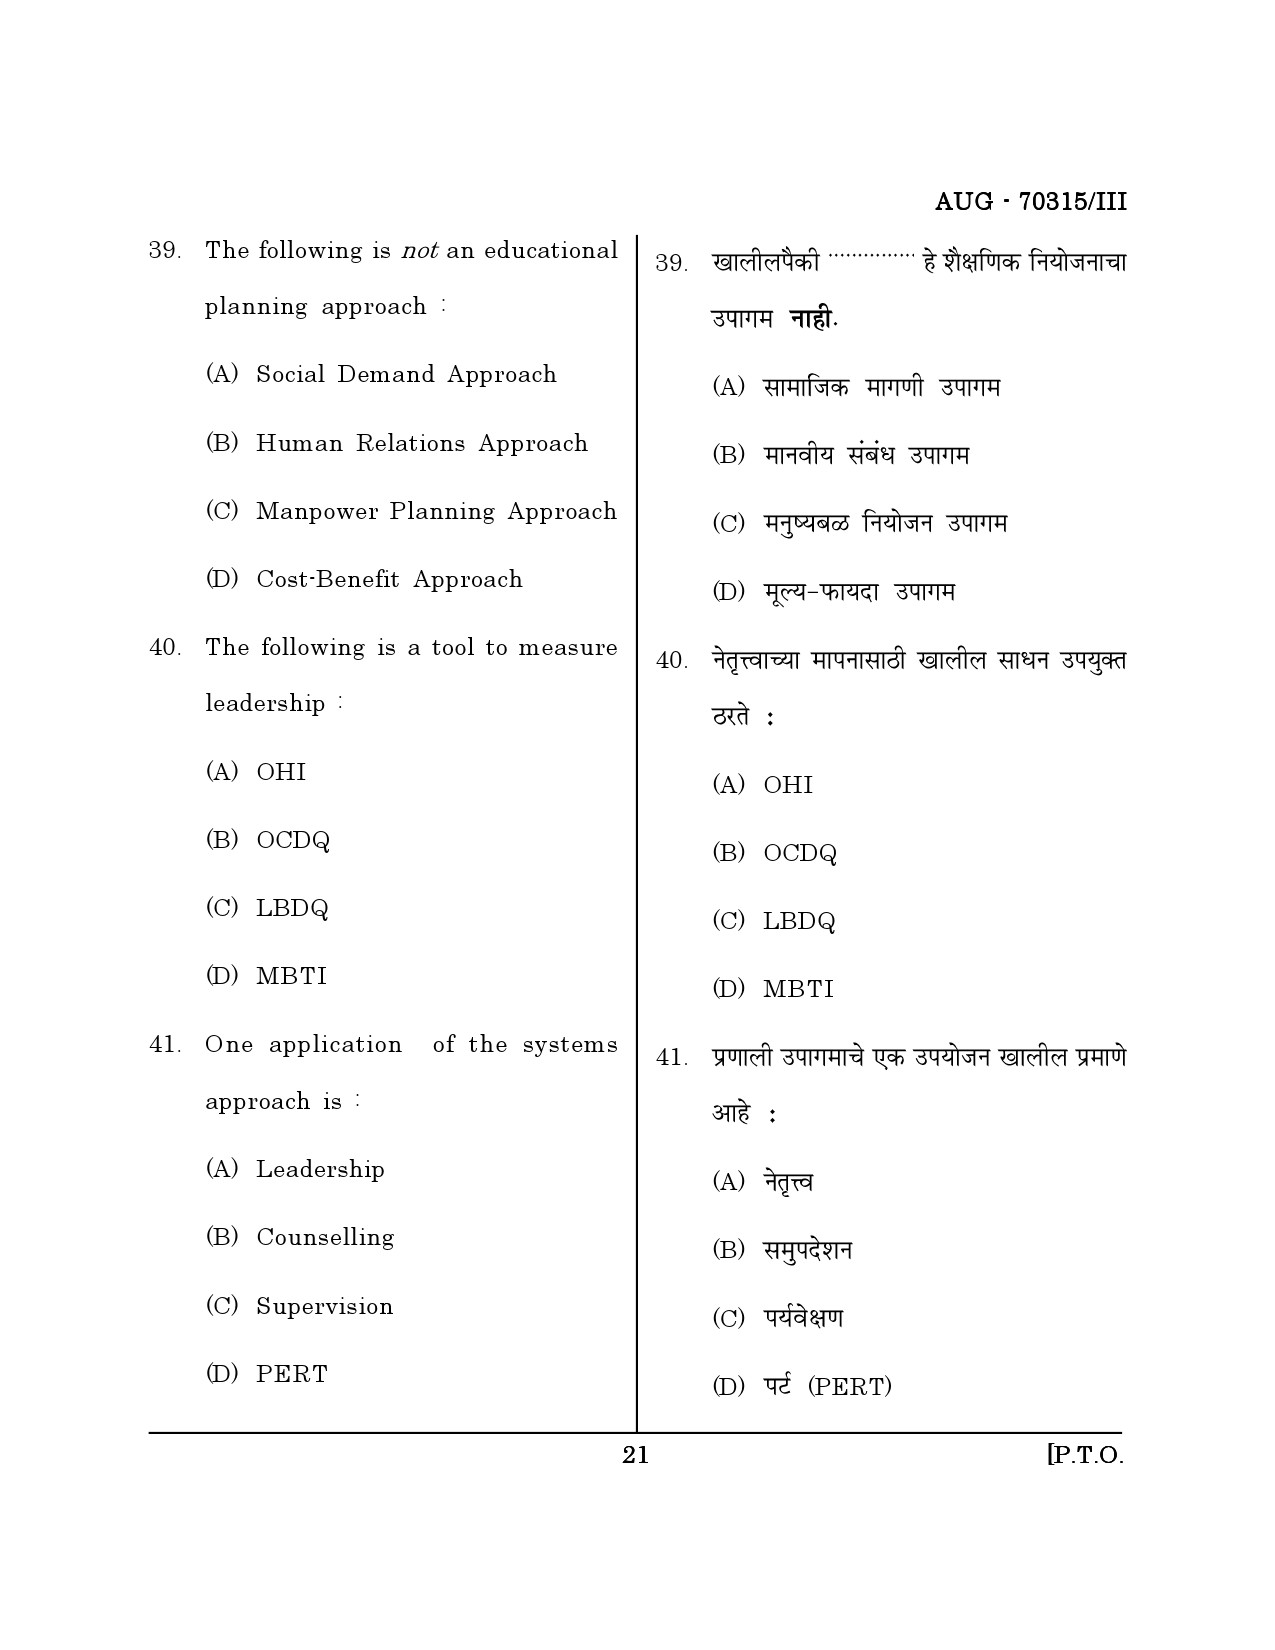 Maharashtra SET Education Question Paper III August 2015 20